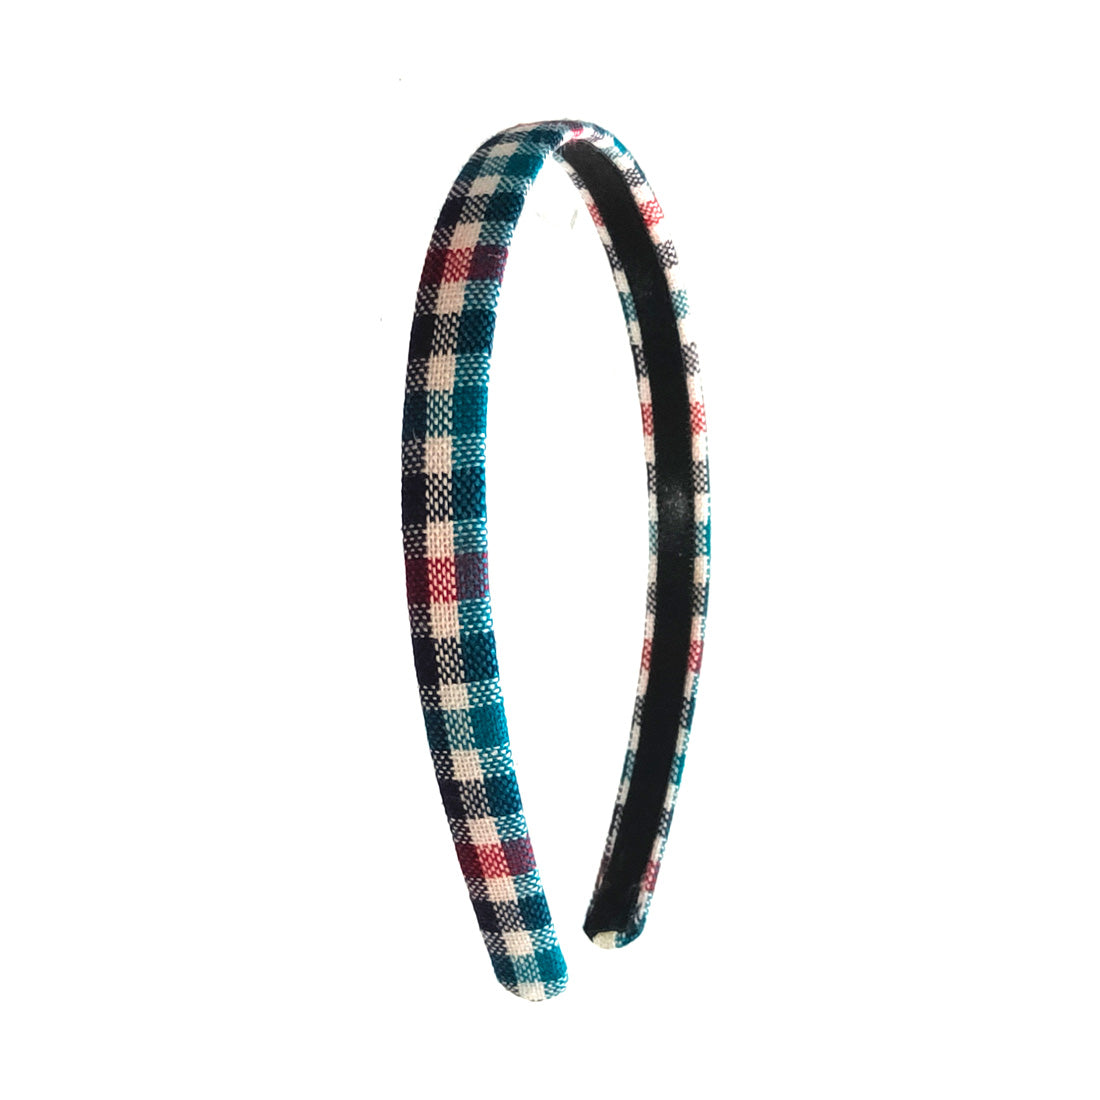 Anokhi Ada Half Inch Handmade Multi-colour Check Design Fabric Hairband/Headband for Girls and Women -14-10H